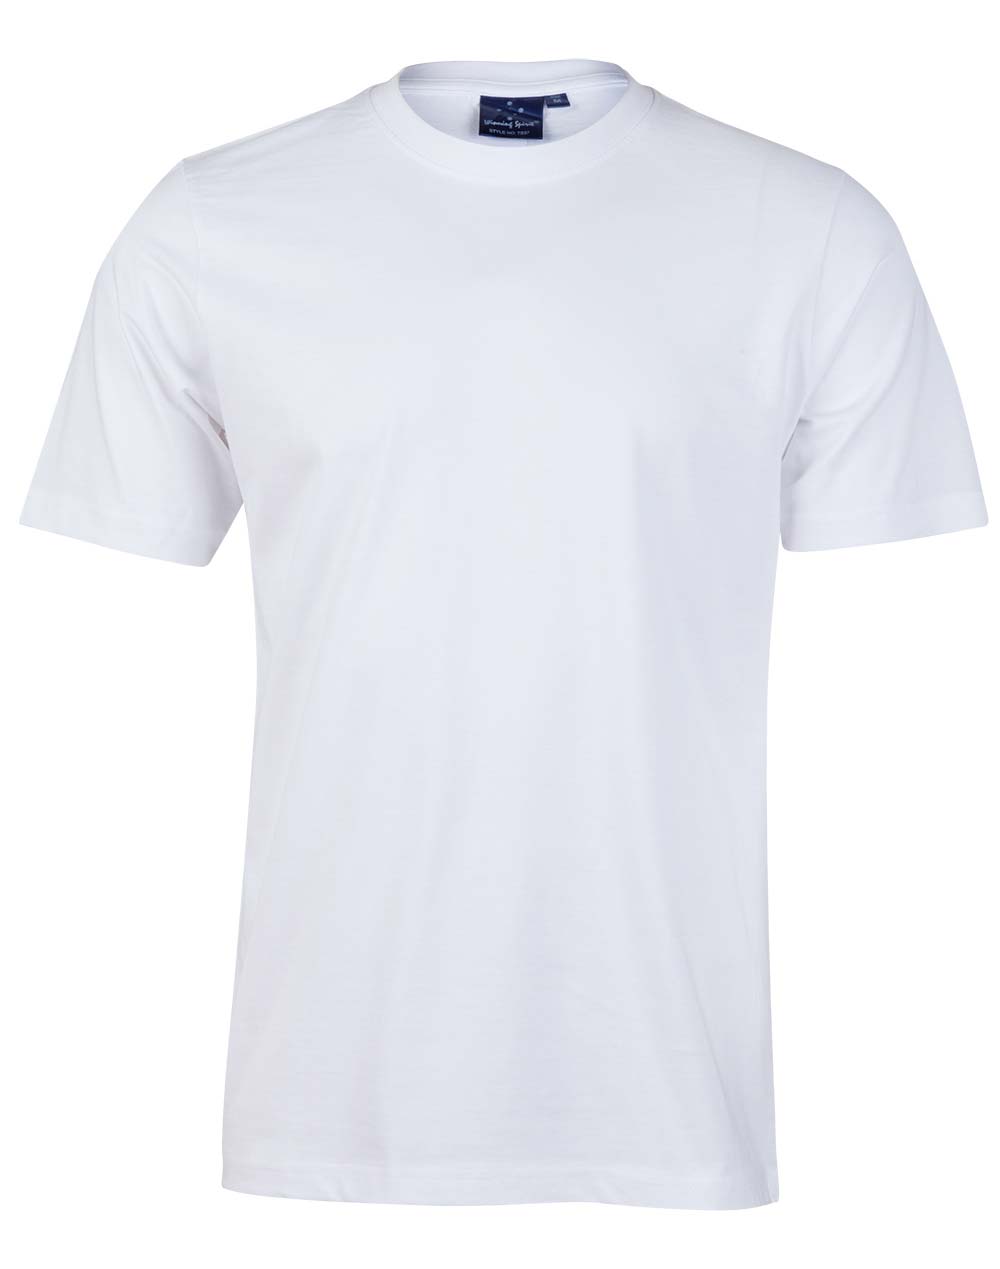 Custom (Black) Semi-Fitted T-Shirts Men's Online in Perth Australia